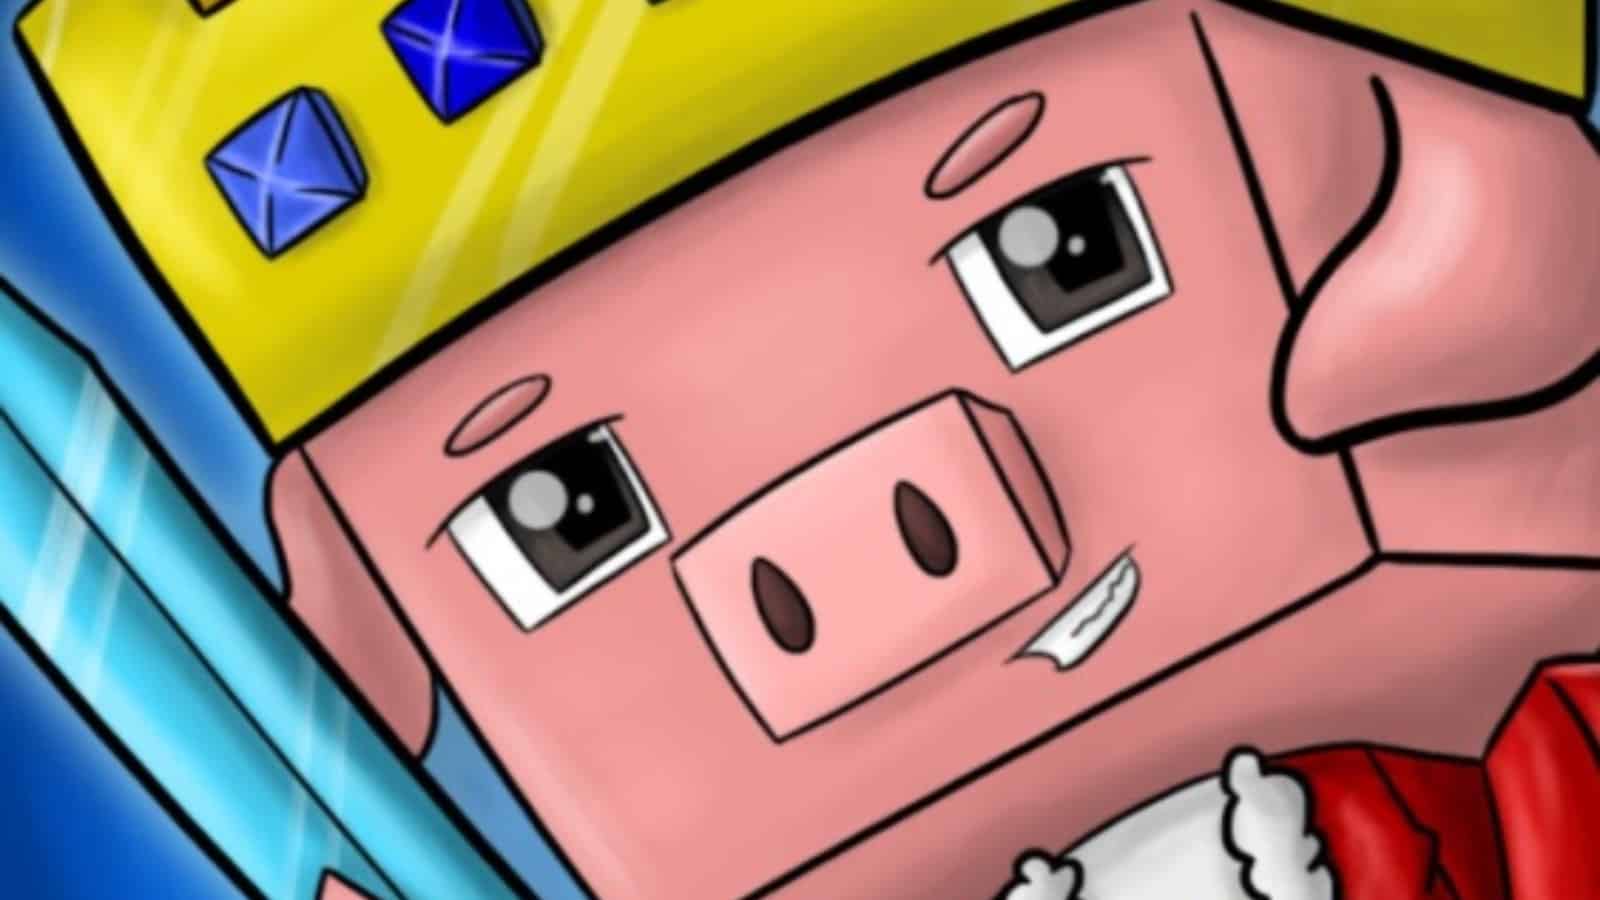 Technoblade never dies is being added to Minecraft's splashes